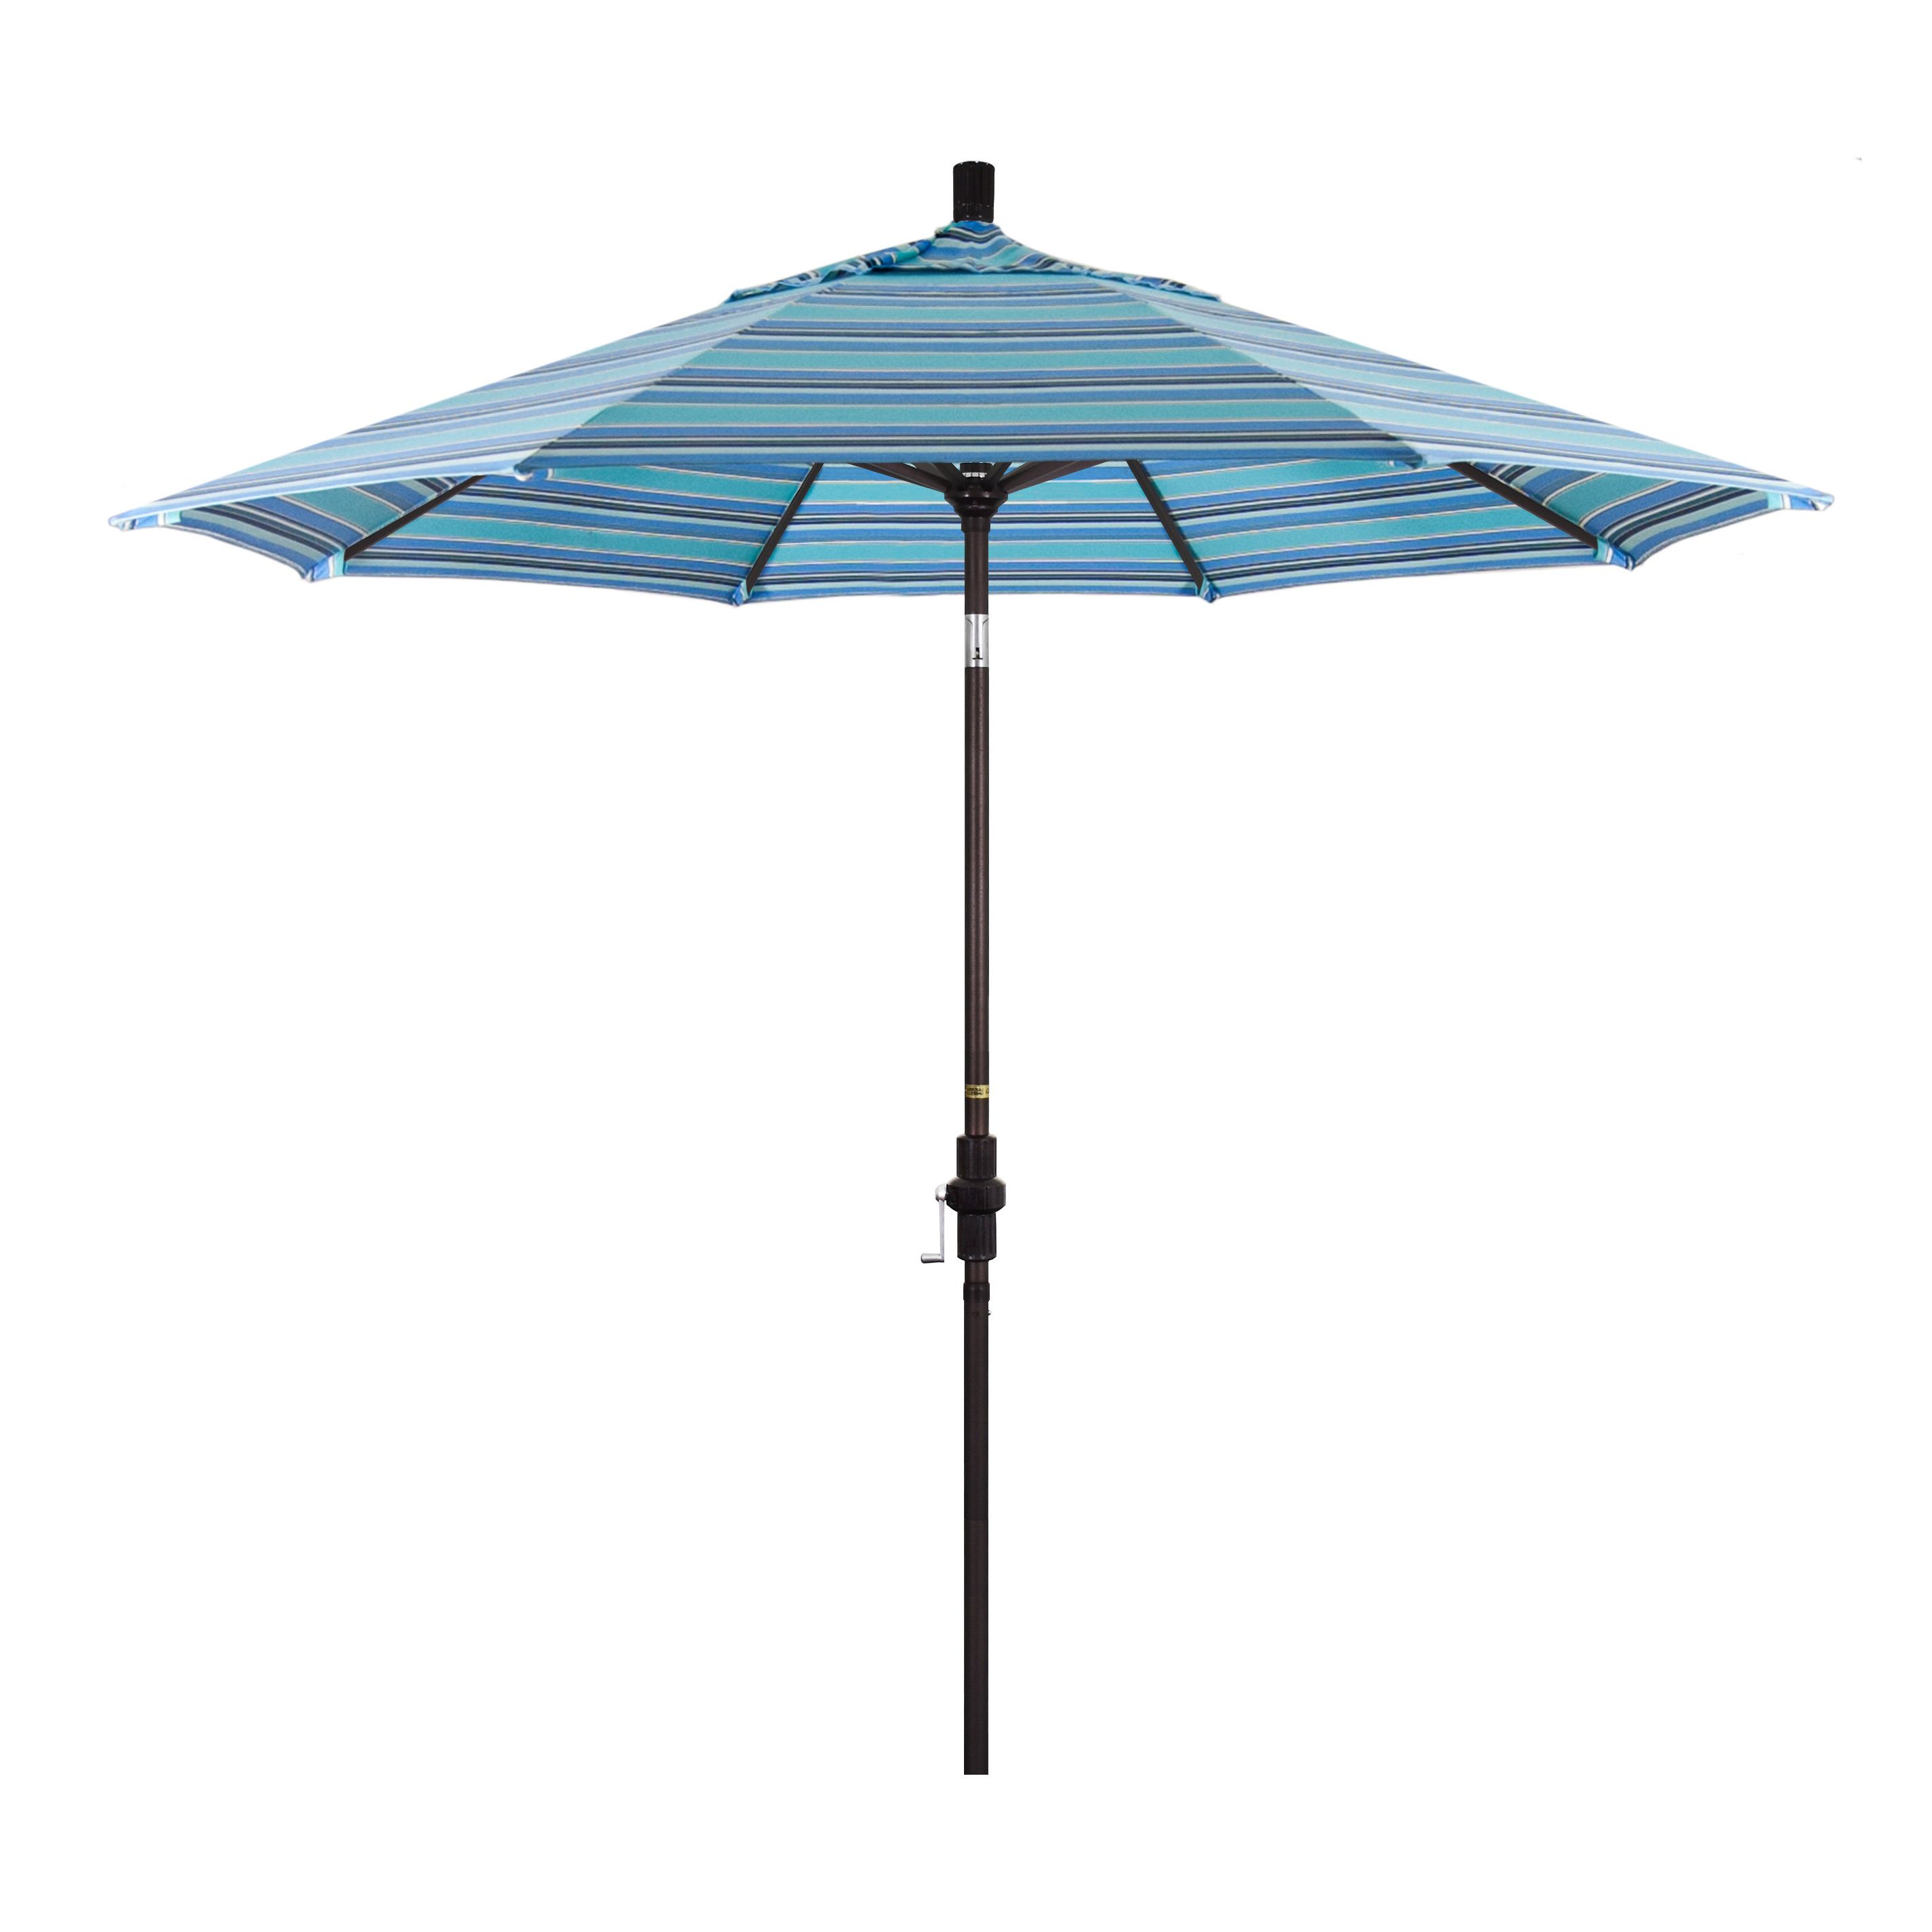 Golden State Series 9' Market Sunbrella Umbrella Regarding 2019 Caravelle Market Sunbrella Umbrellas (View 6 of 20)